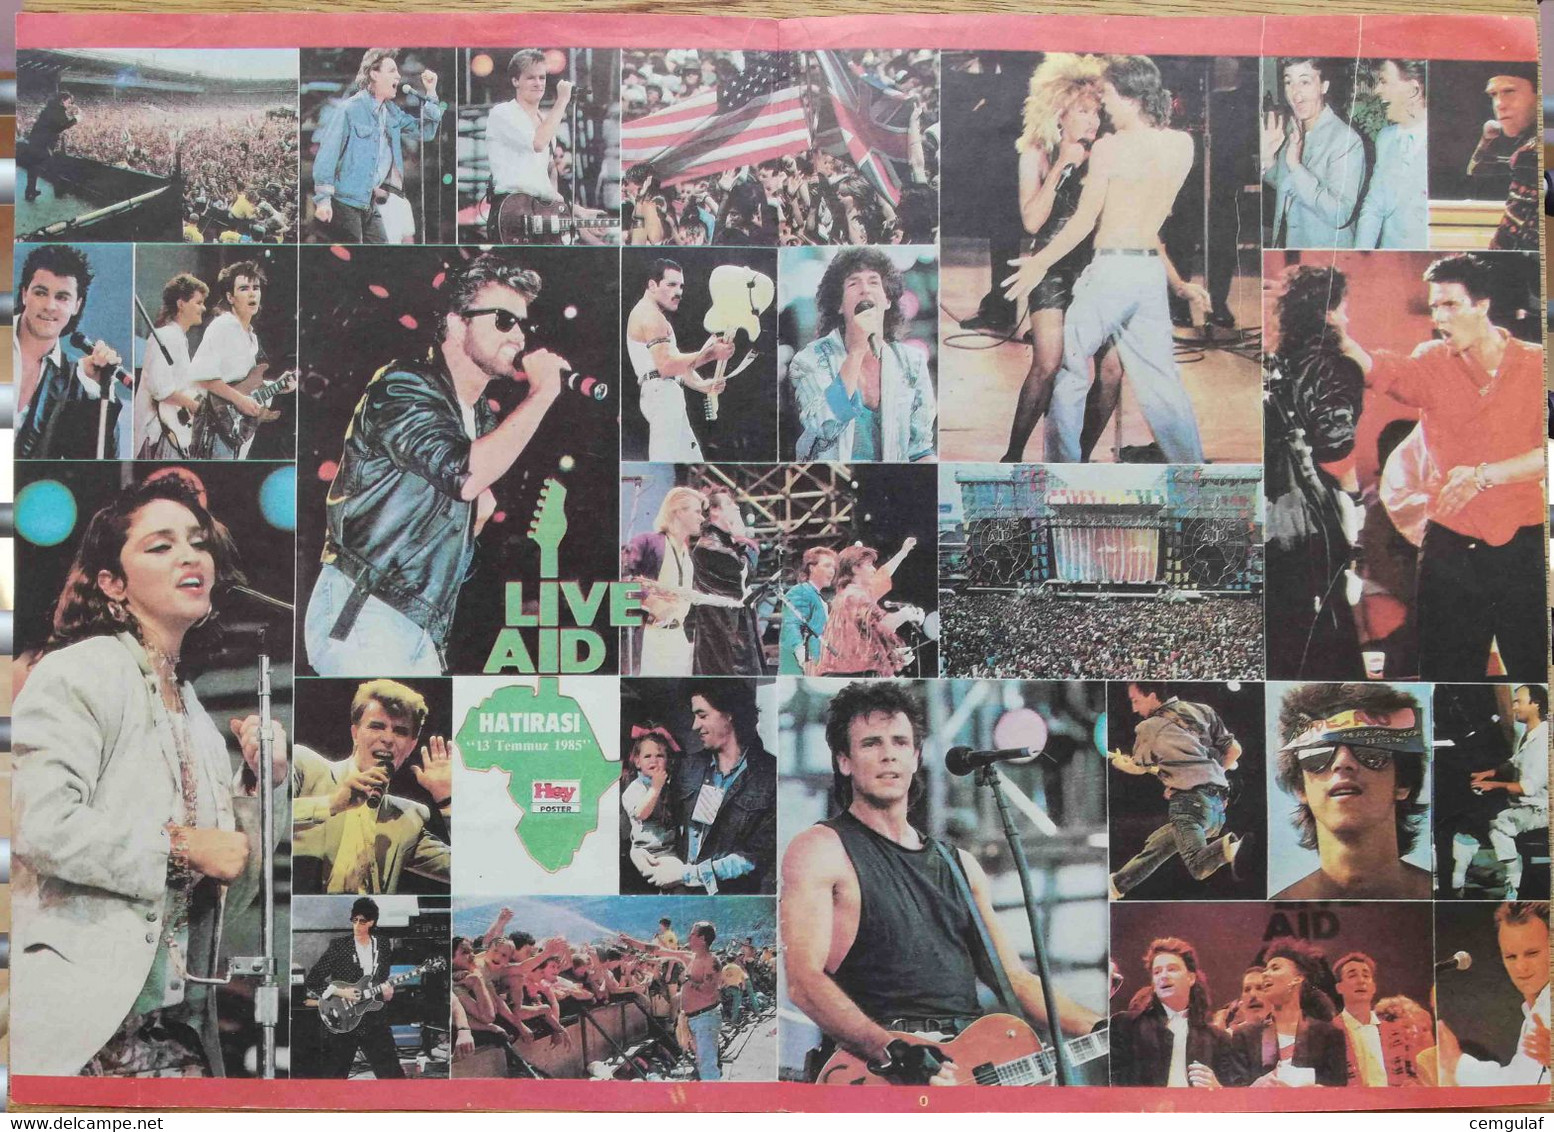 LIVE AID+MARILLION+PAUL HARDCASTLE POSTER 13 JUNE 1985 - Manifesti & Poster